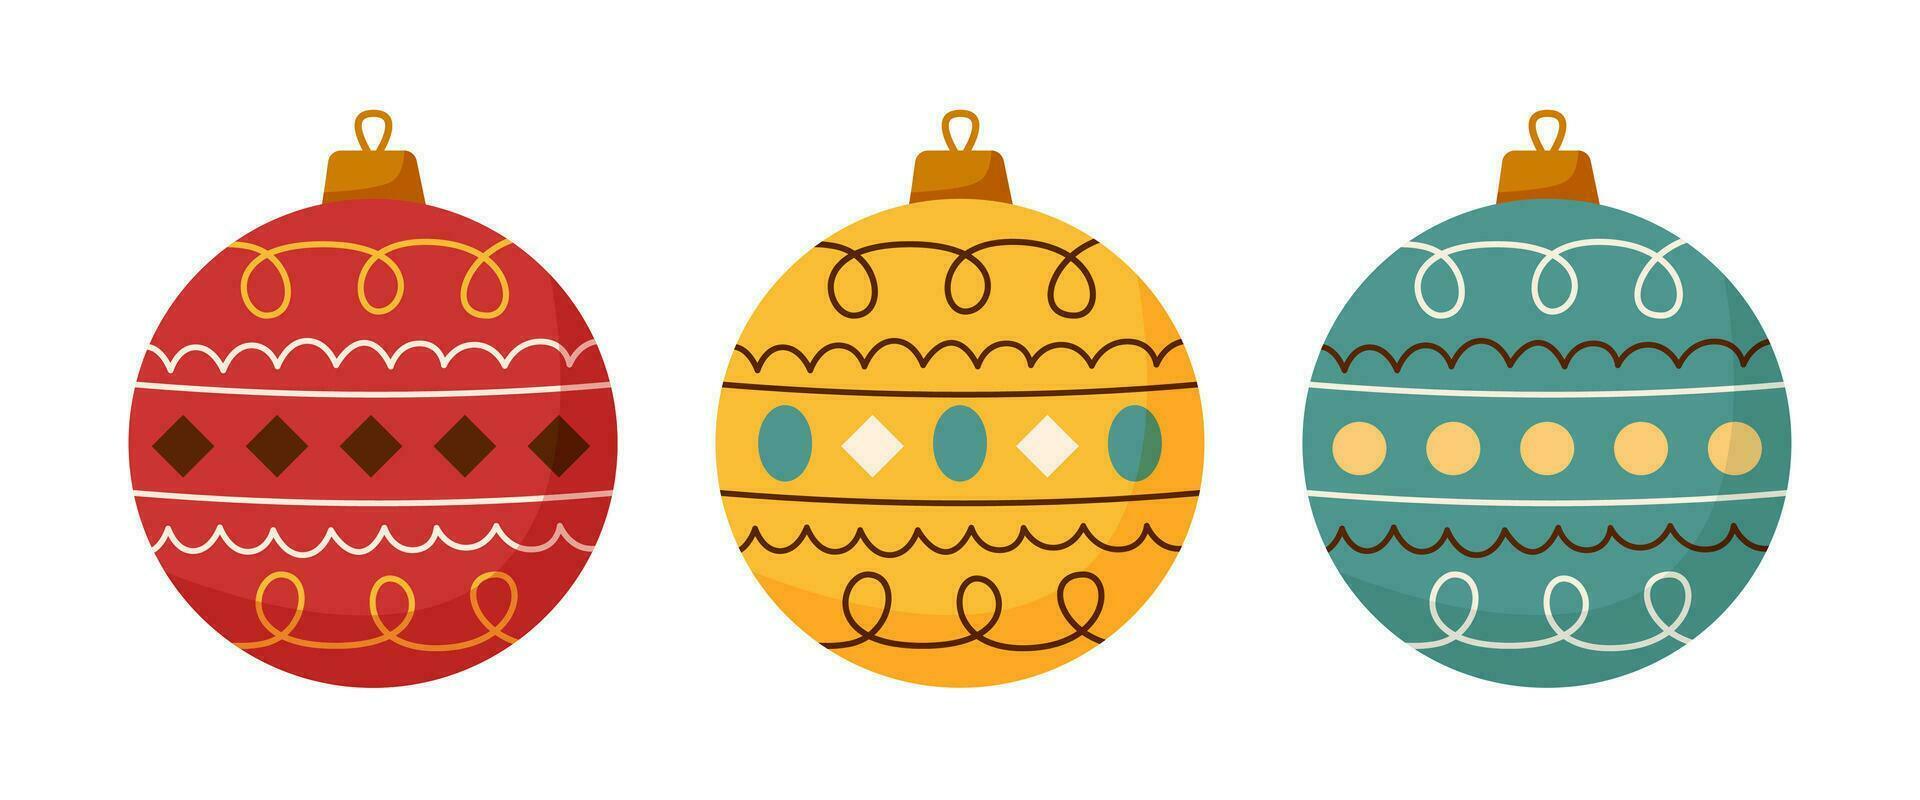 Ornaments Christmas set vector